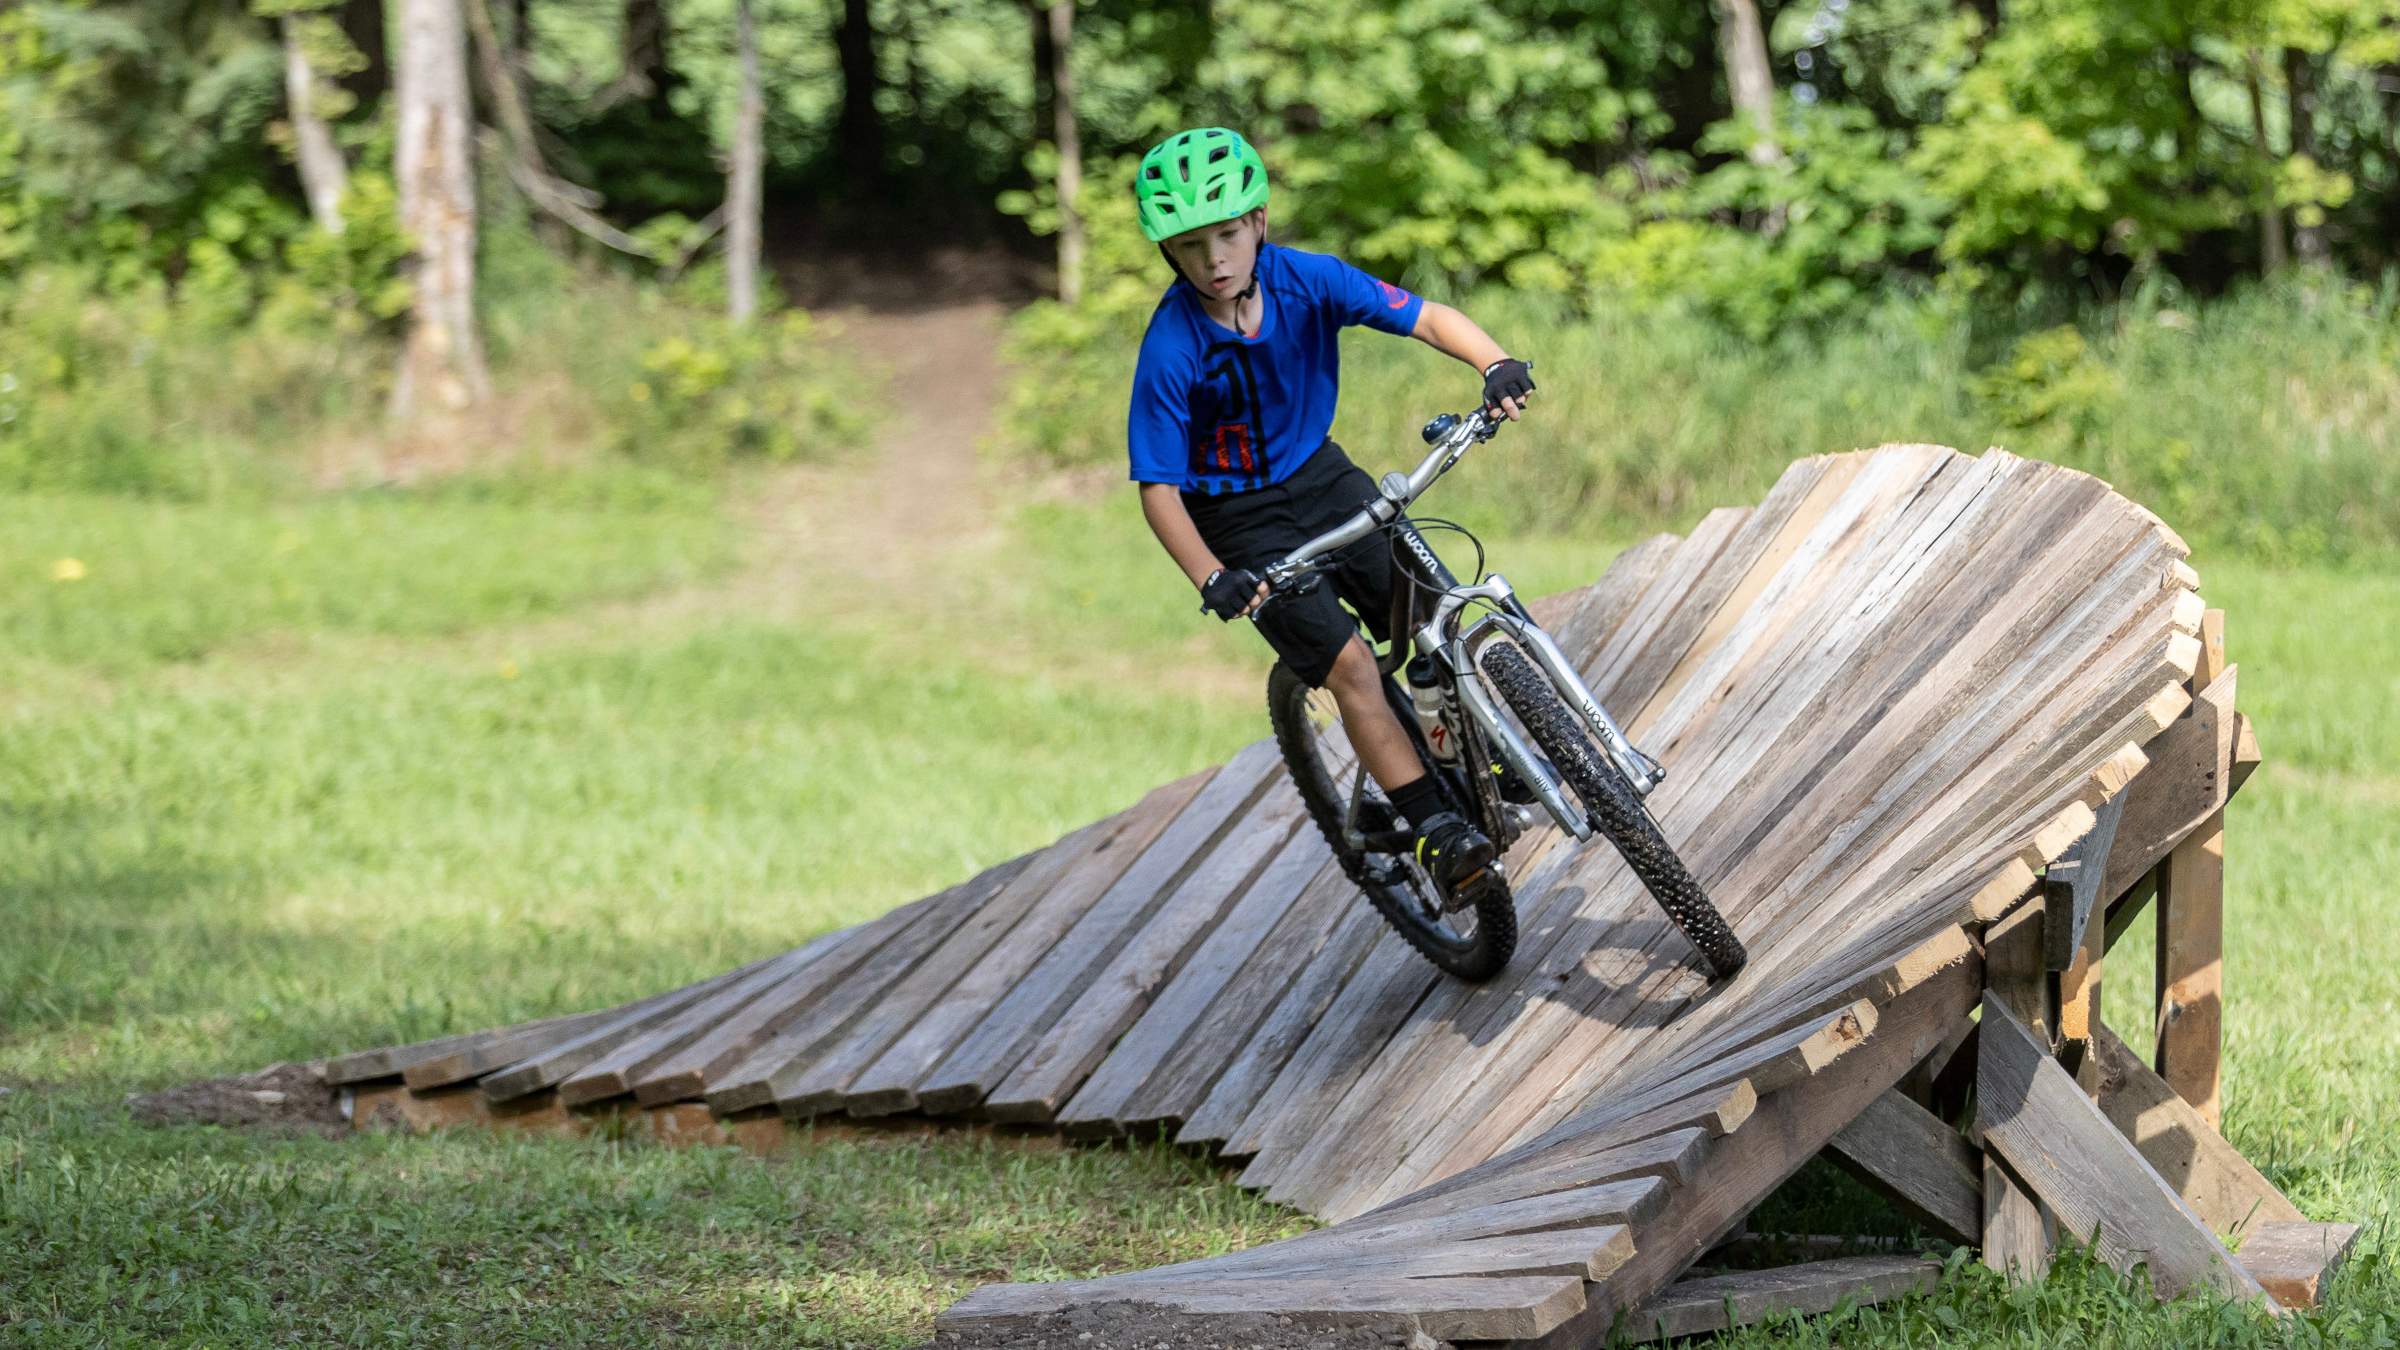 Bike Skills Camp for Kids at Blue Mountain